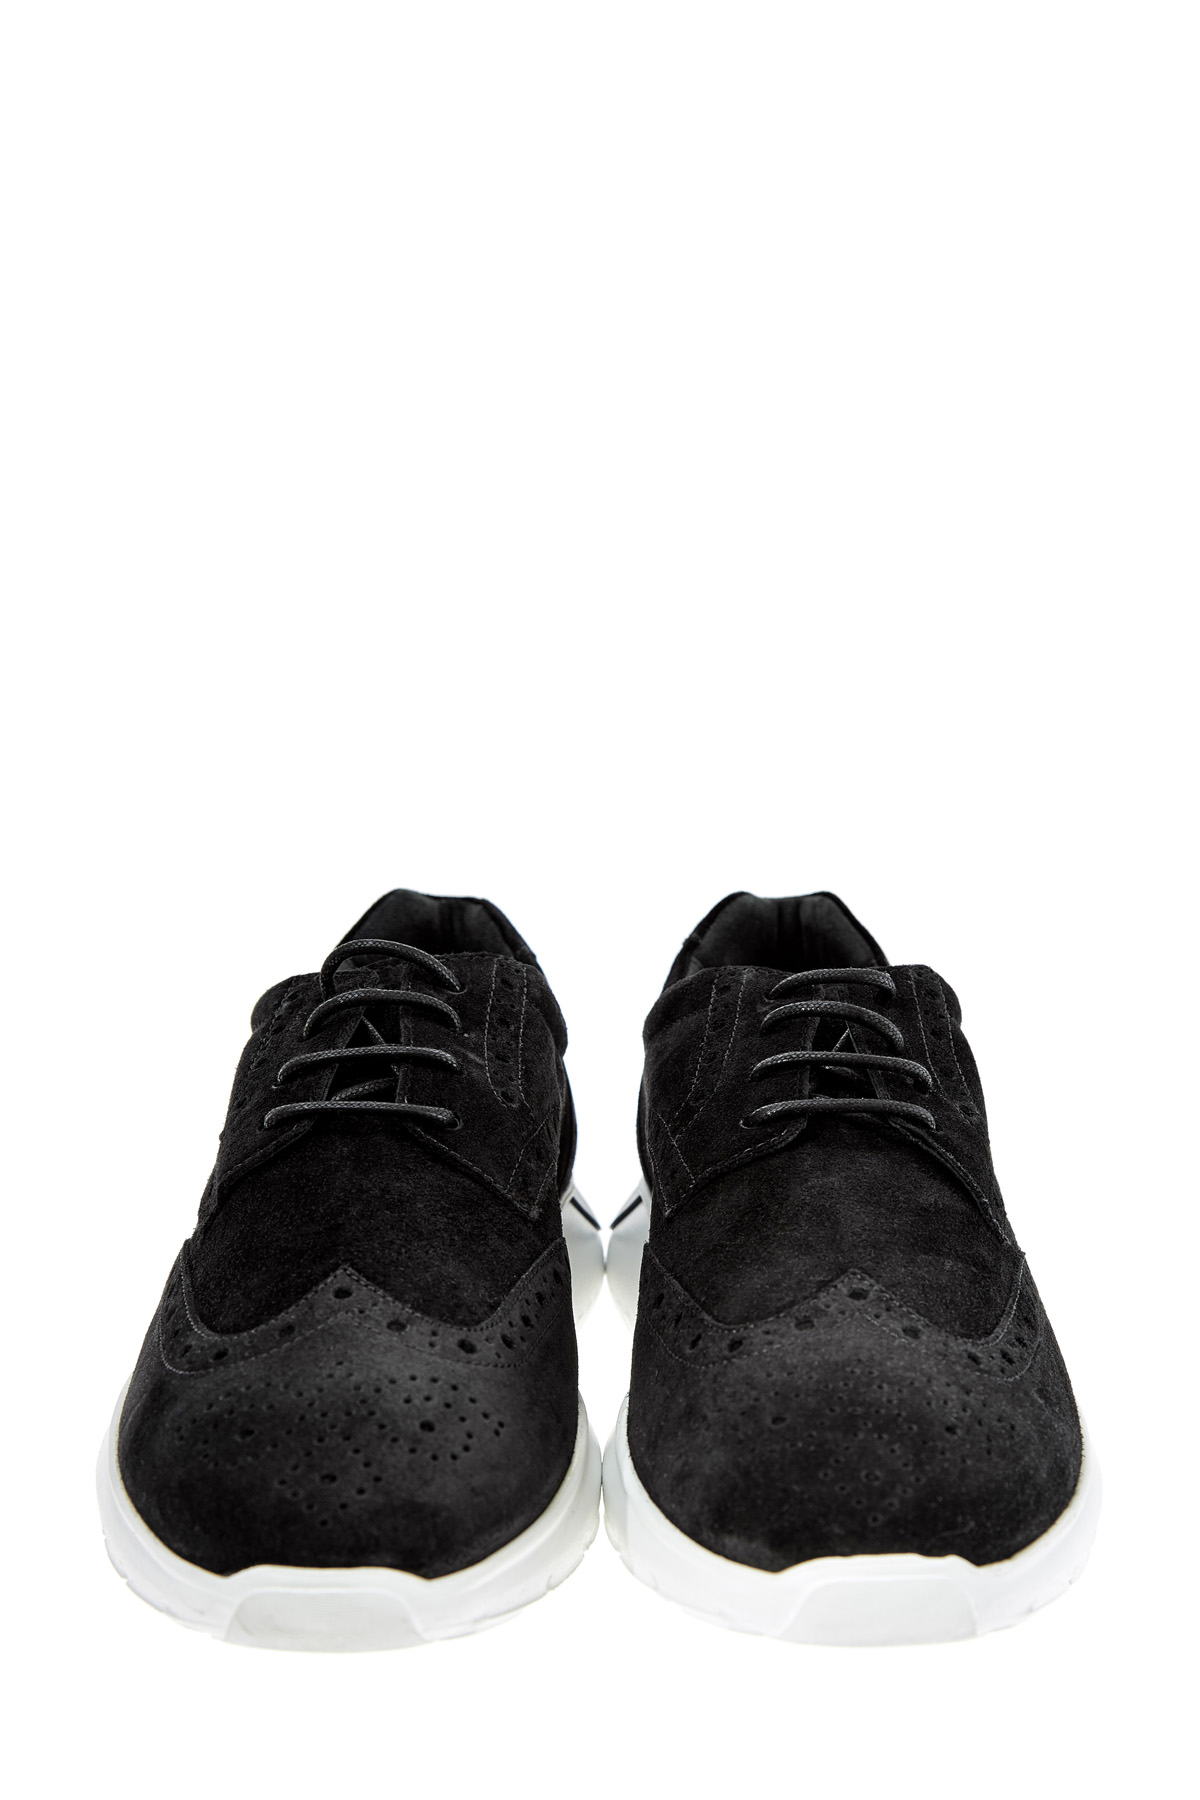 Кроссовки в стиле sportcasual  из замши на амортизирующей подошве HOGAN, цвет черно-белый, размер 40.5;42.5;43;43.5;44.5 - фото 5